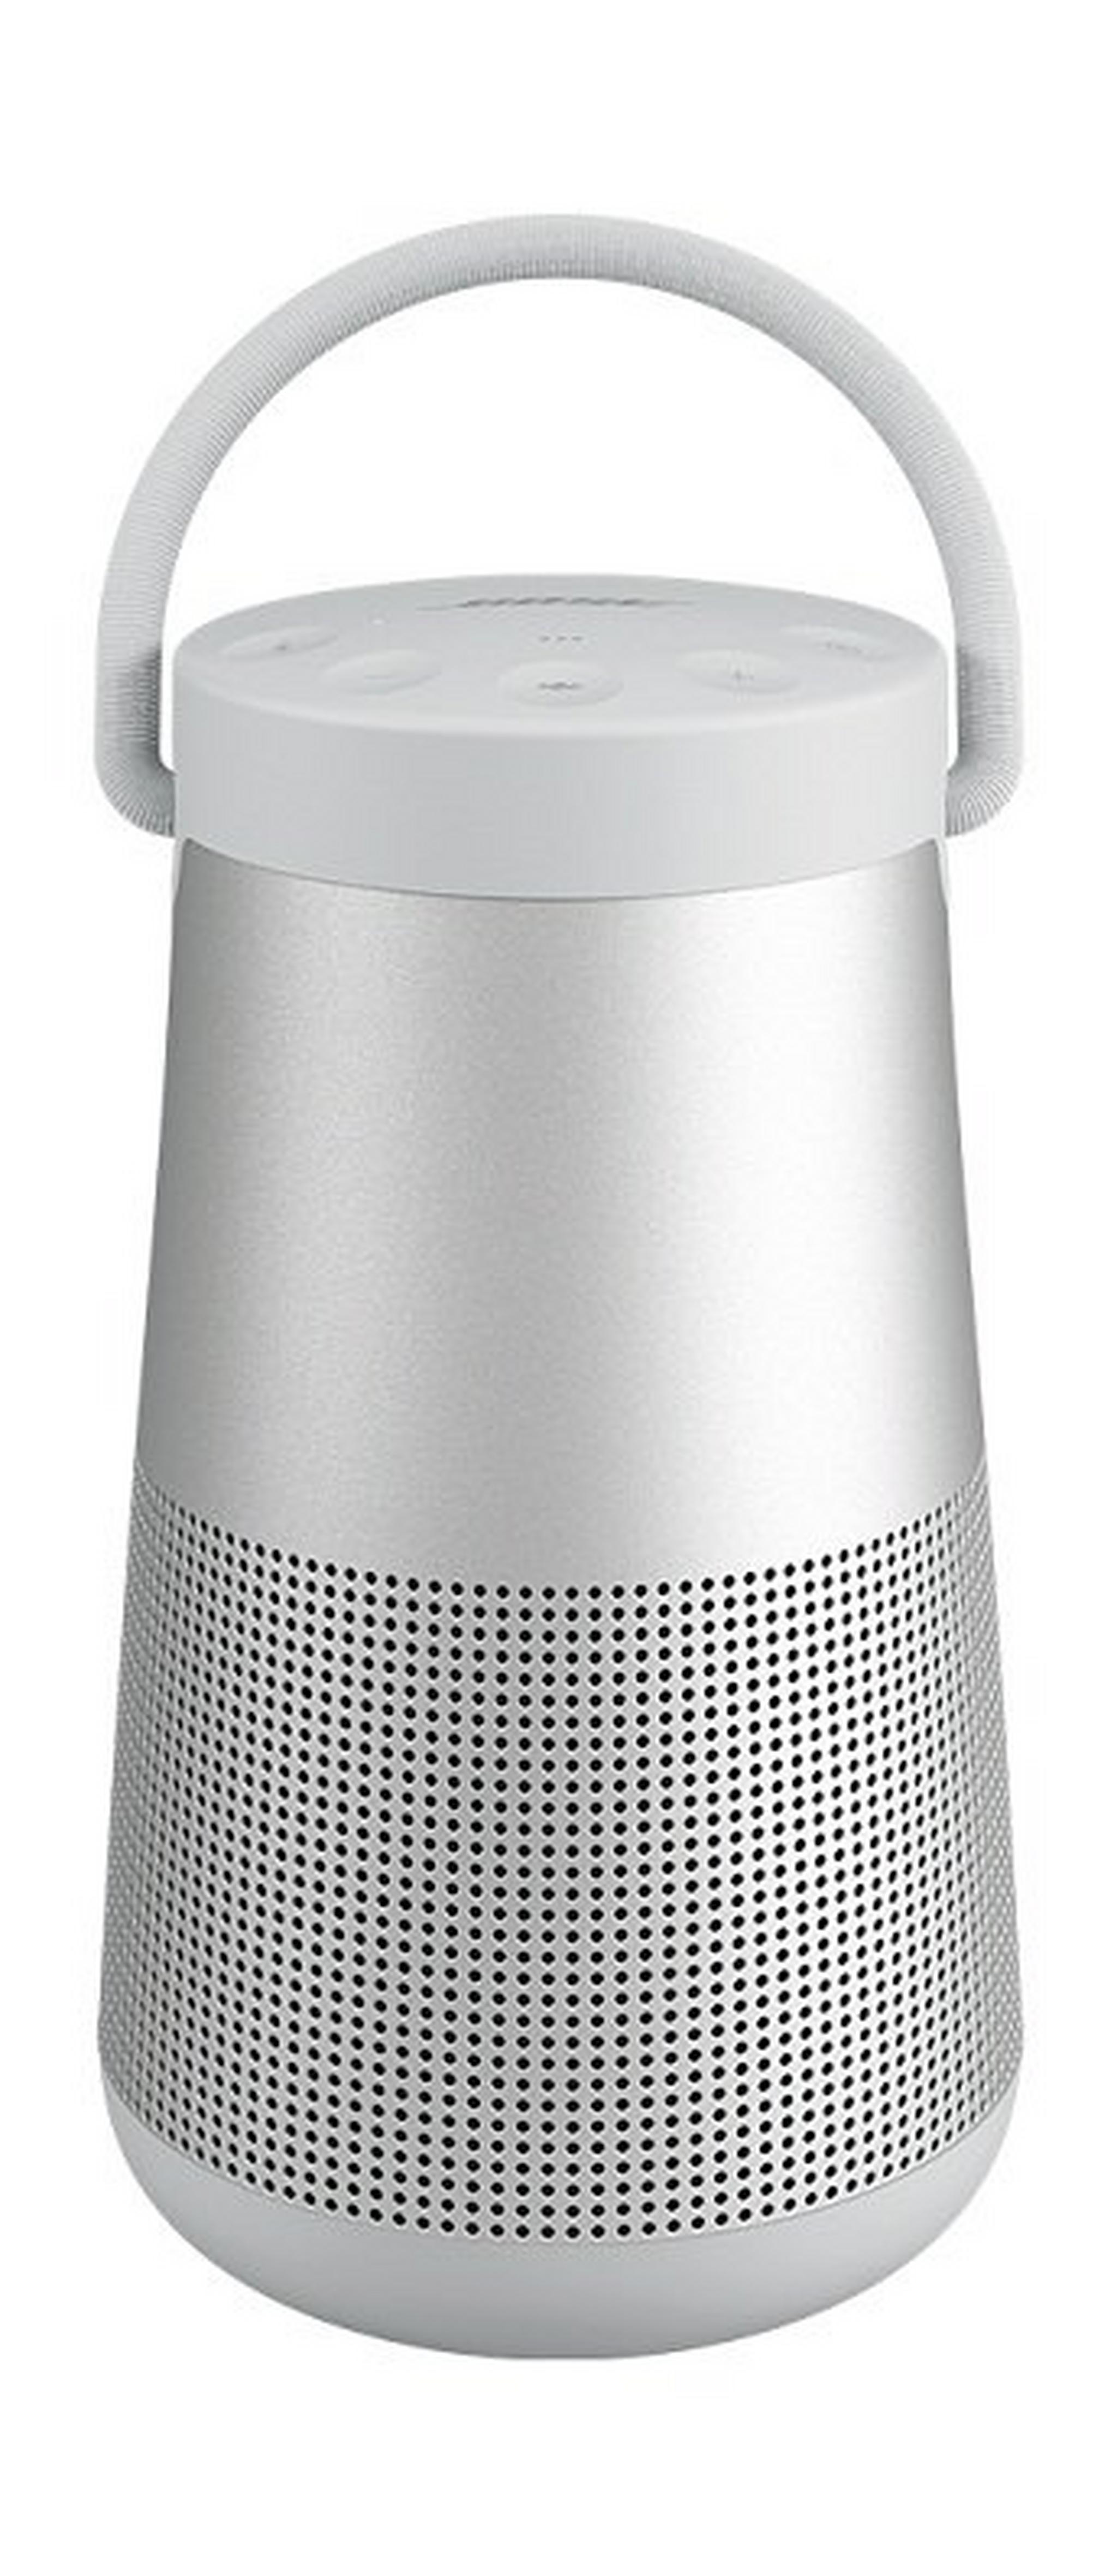 Bose Bluetooth Wireless Portable Speaker (Soundlink Revovle+) - Grey